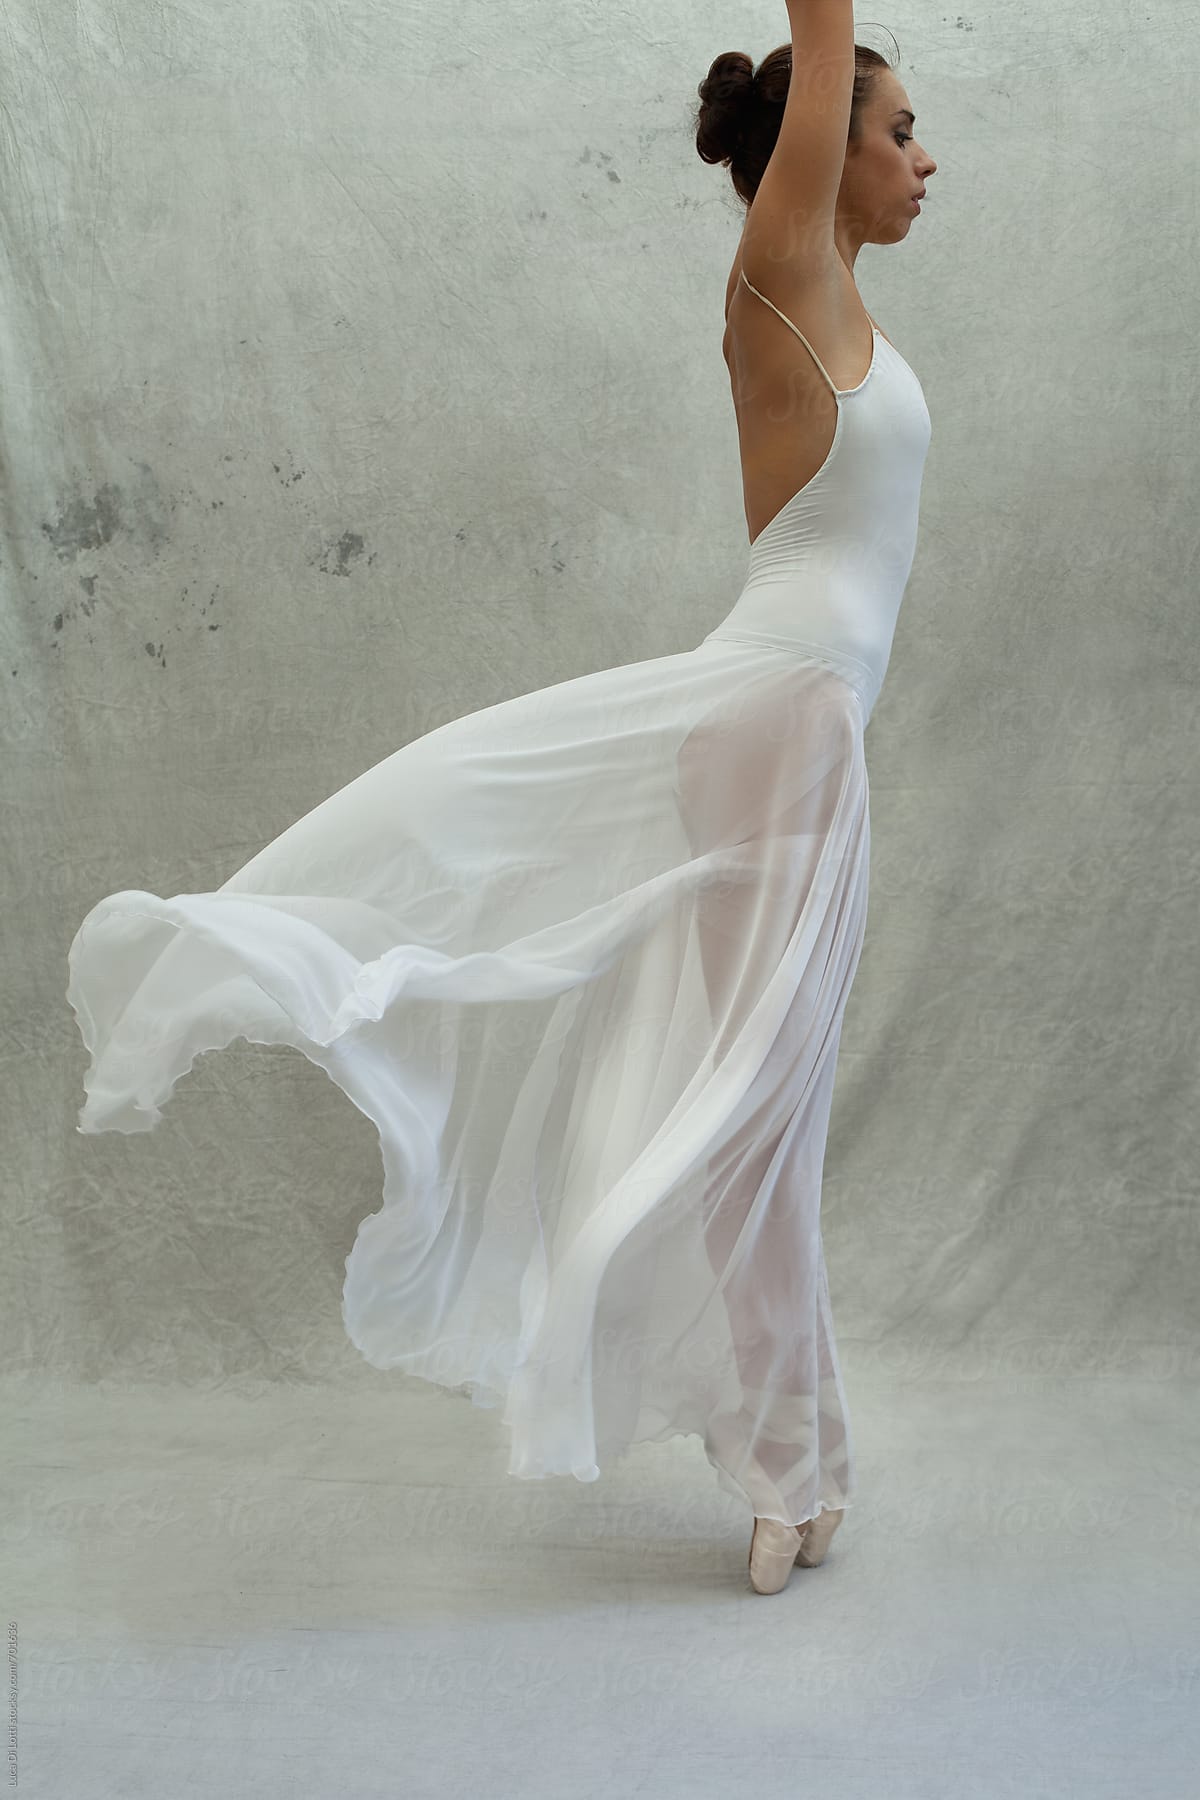 Dancer in white dress